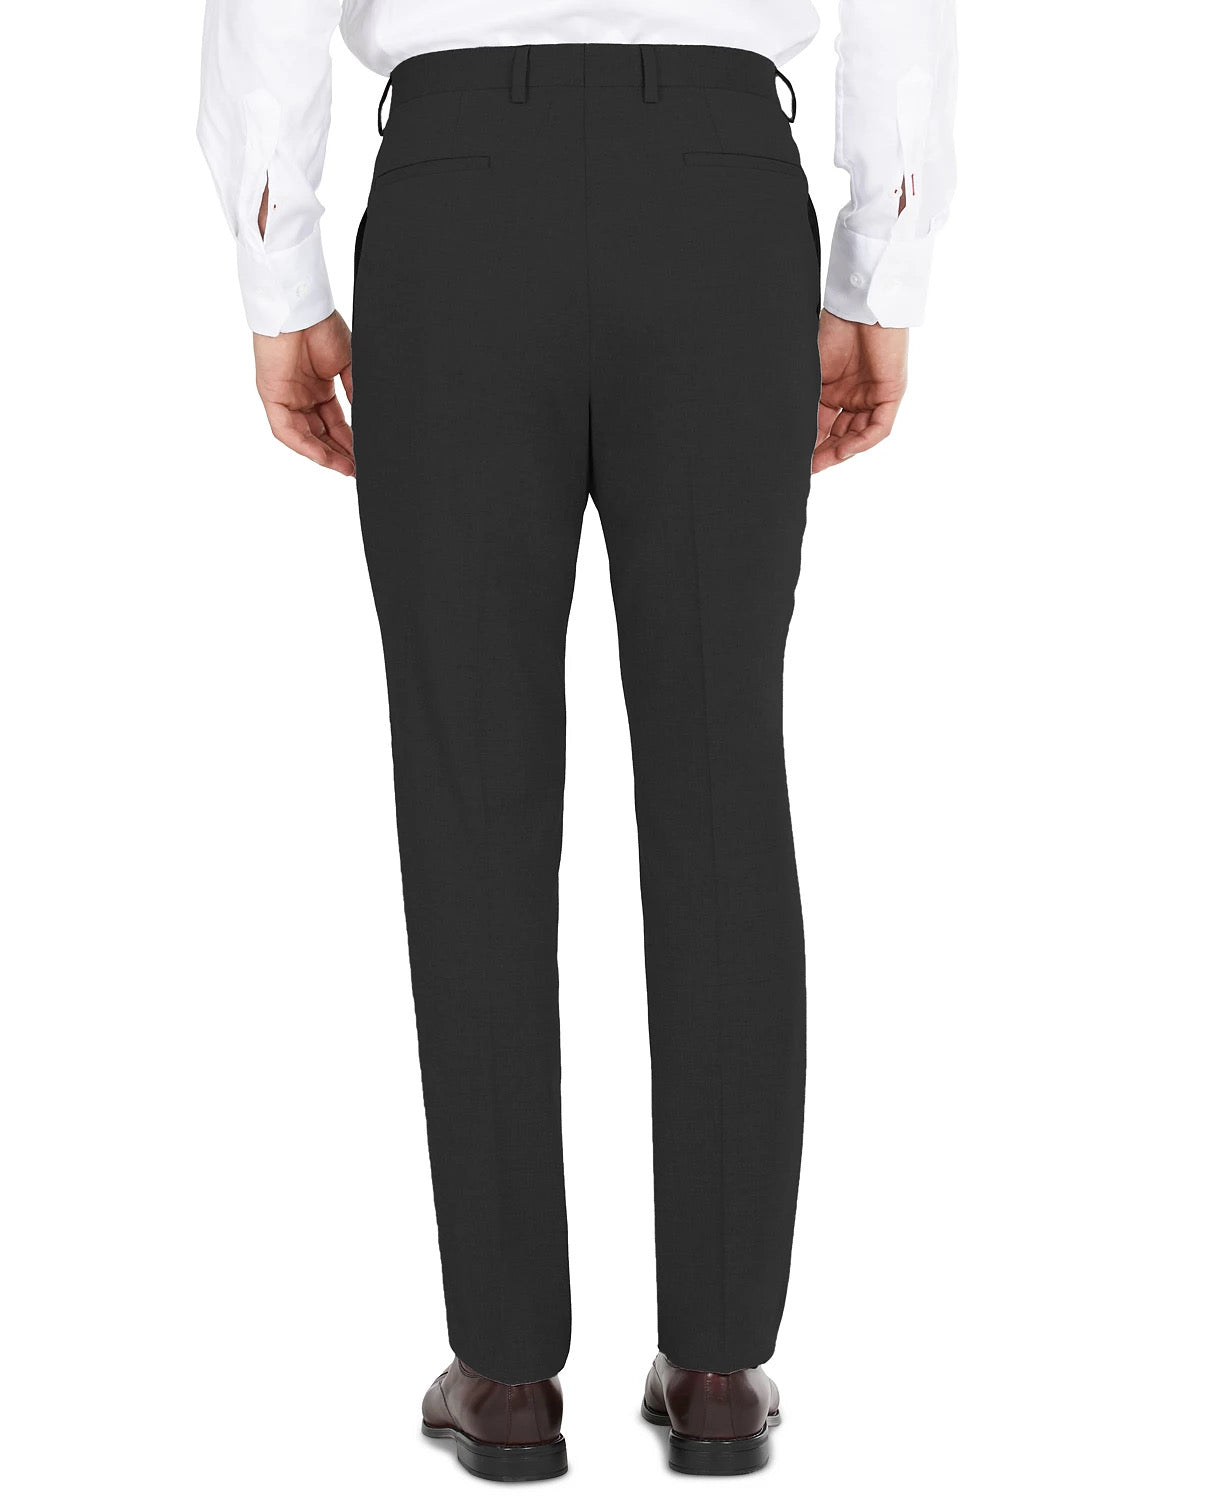 DKNY Men's Dress Pants Black 31 x 30 Modern Fit Stretch Flat Front Solid